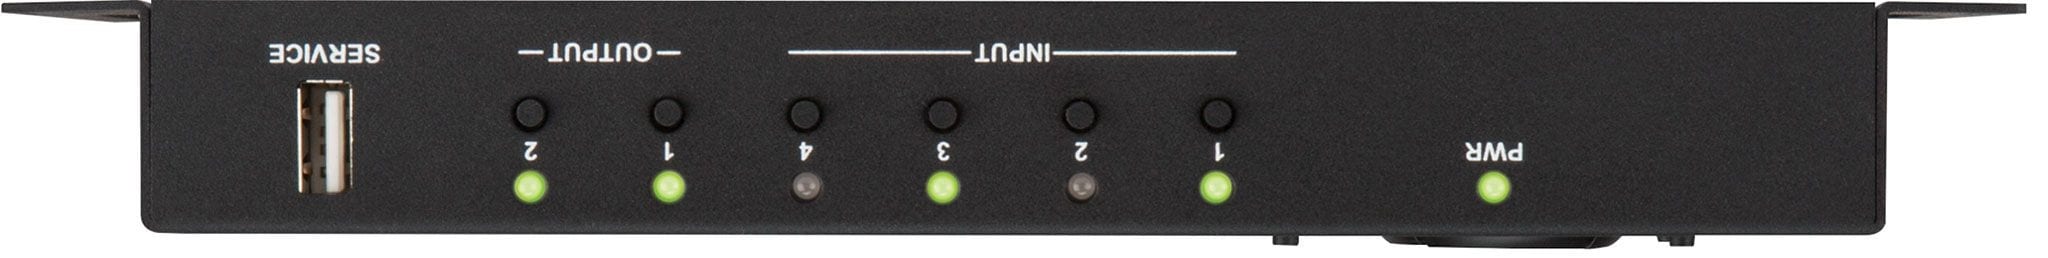 Crestron HD-MD4X2-4K-E - HDMI switch